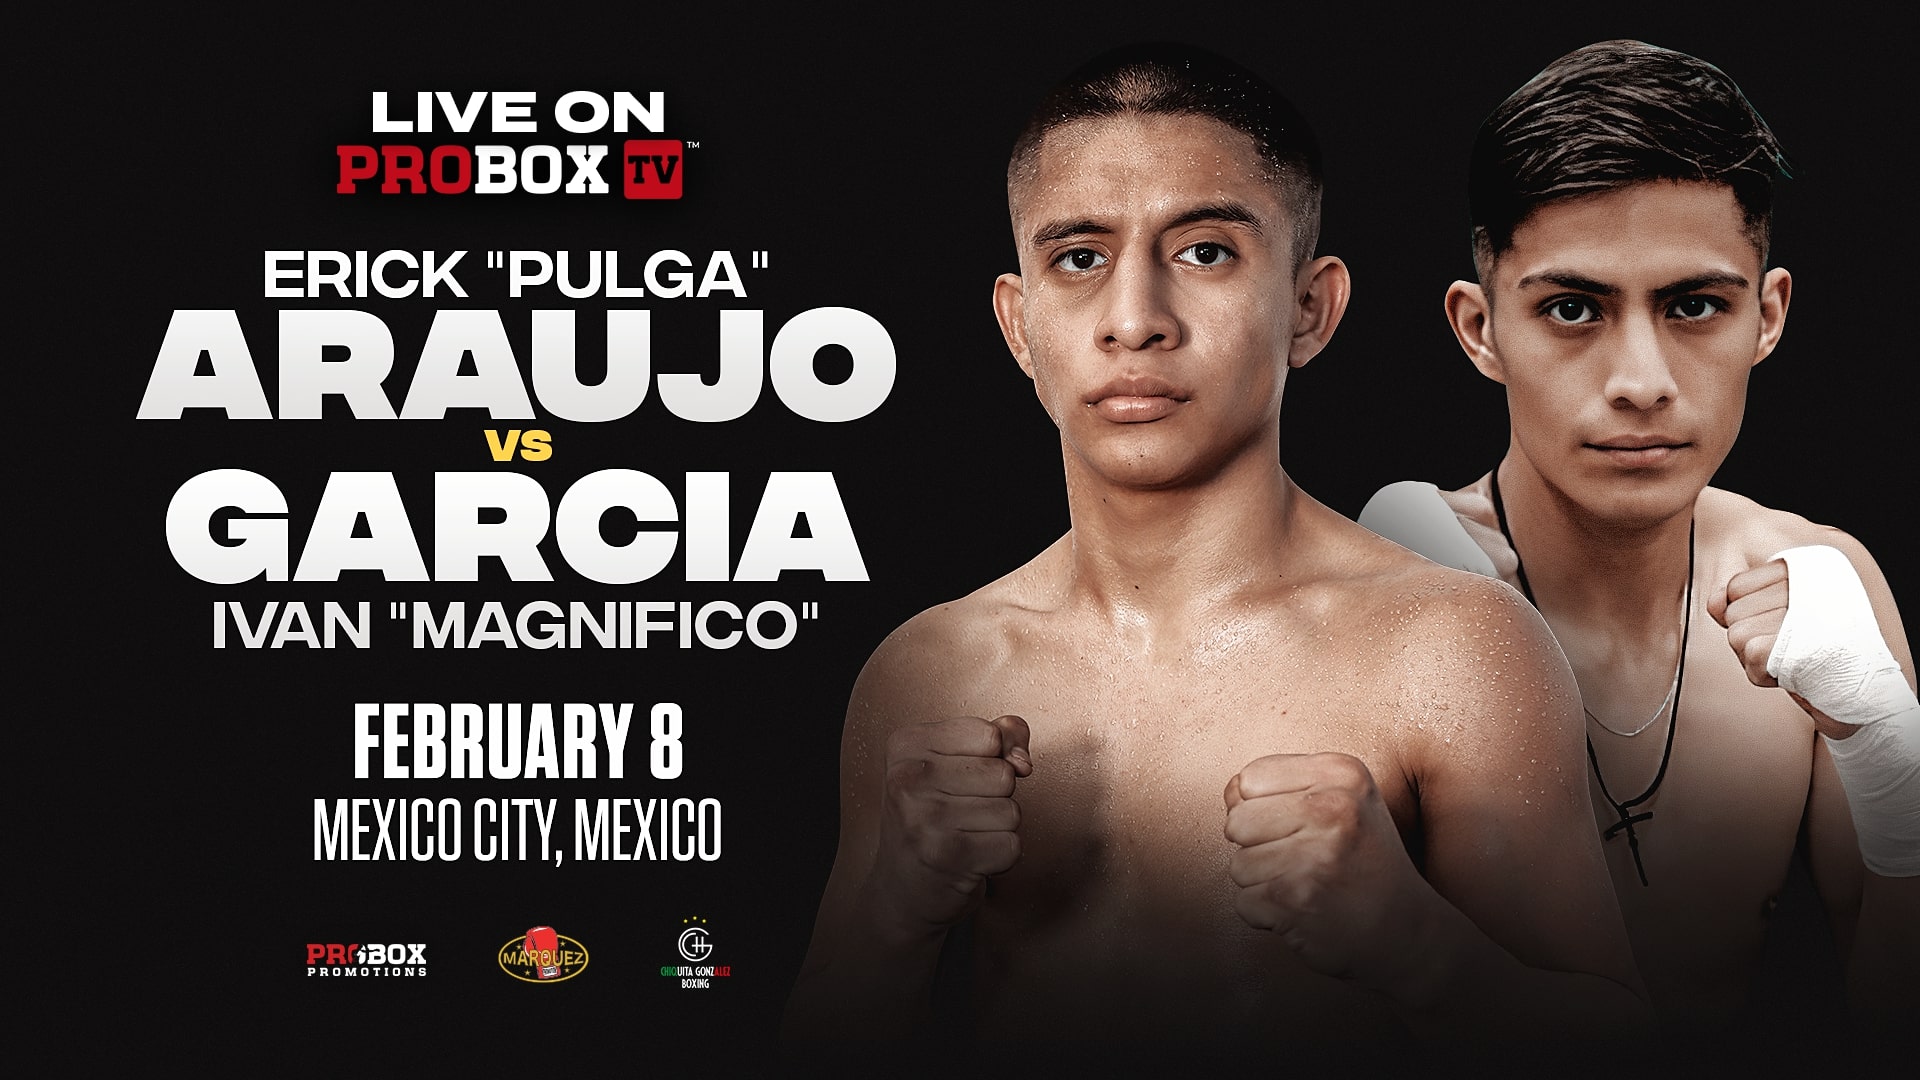 Erick Araujo vs Ivan Garcia February 8th in Mexico City, Mexico